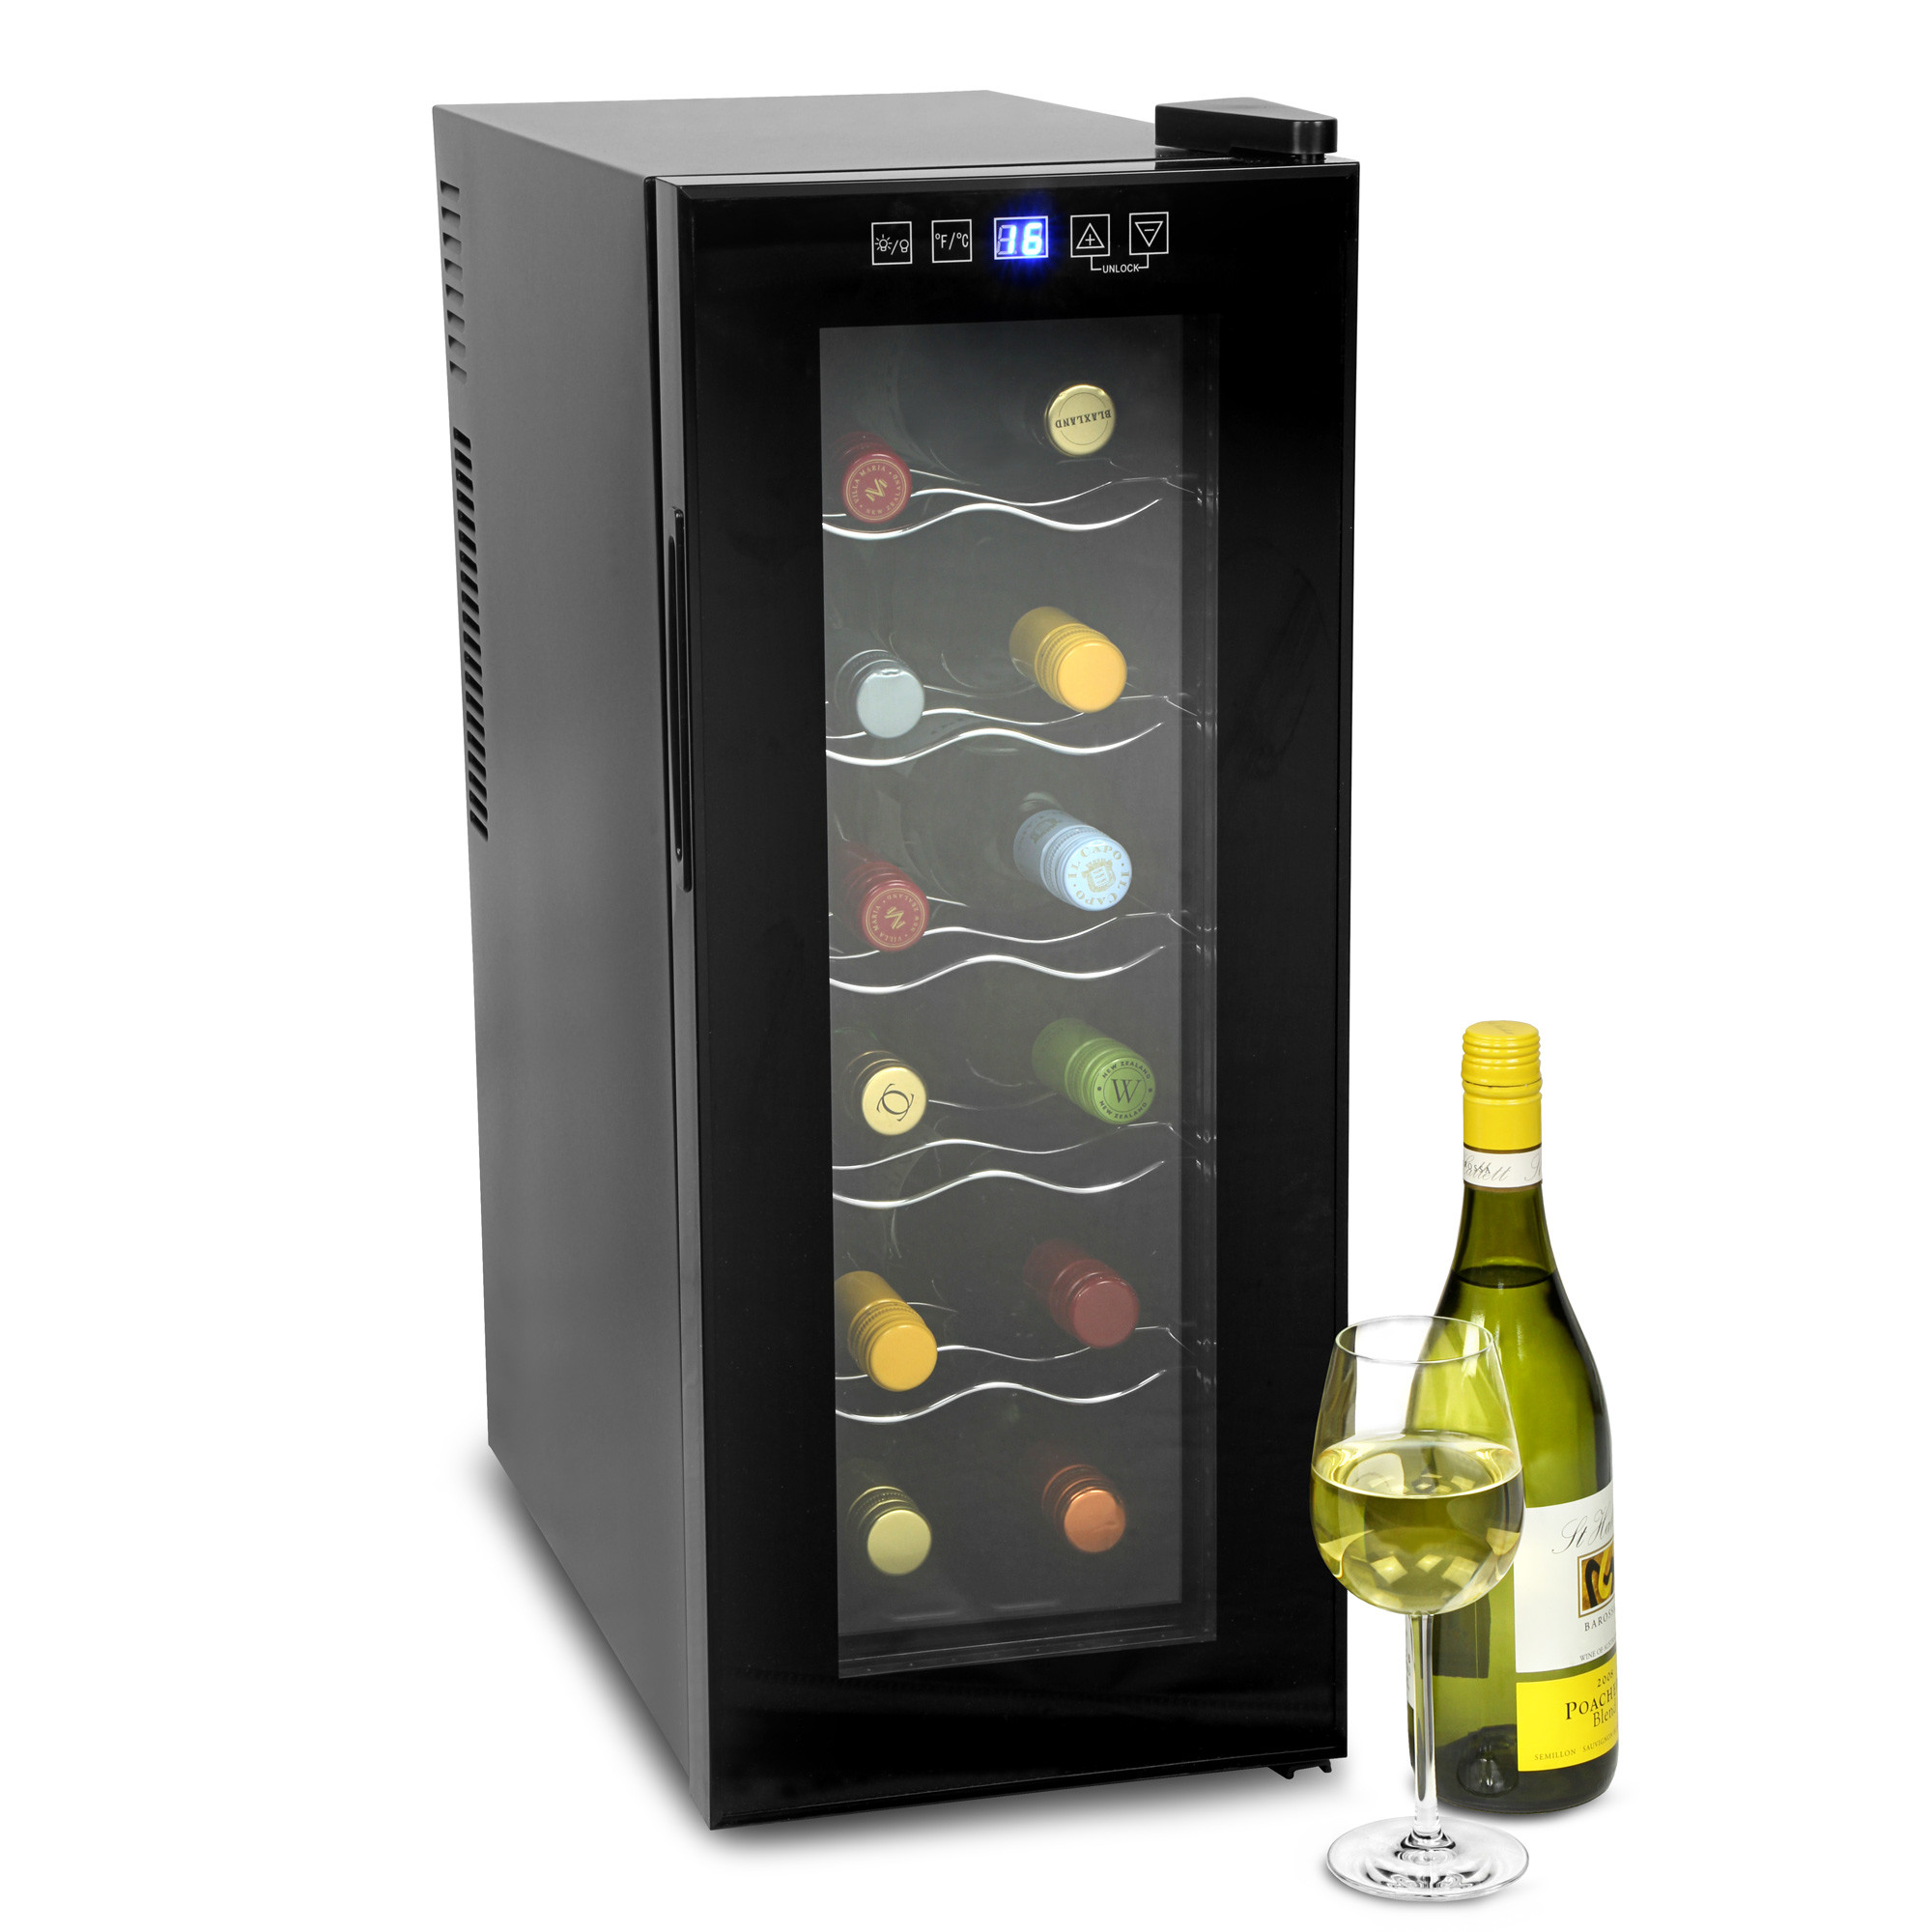 Best ideas about Wine Cellar Coolers
. Save or Pin VinoTech 12 Bottle Wine Cellar Bottle Cooler at drinkstuff Now.